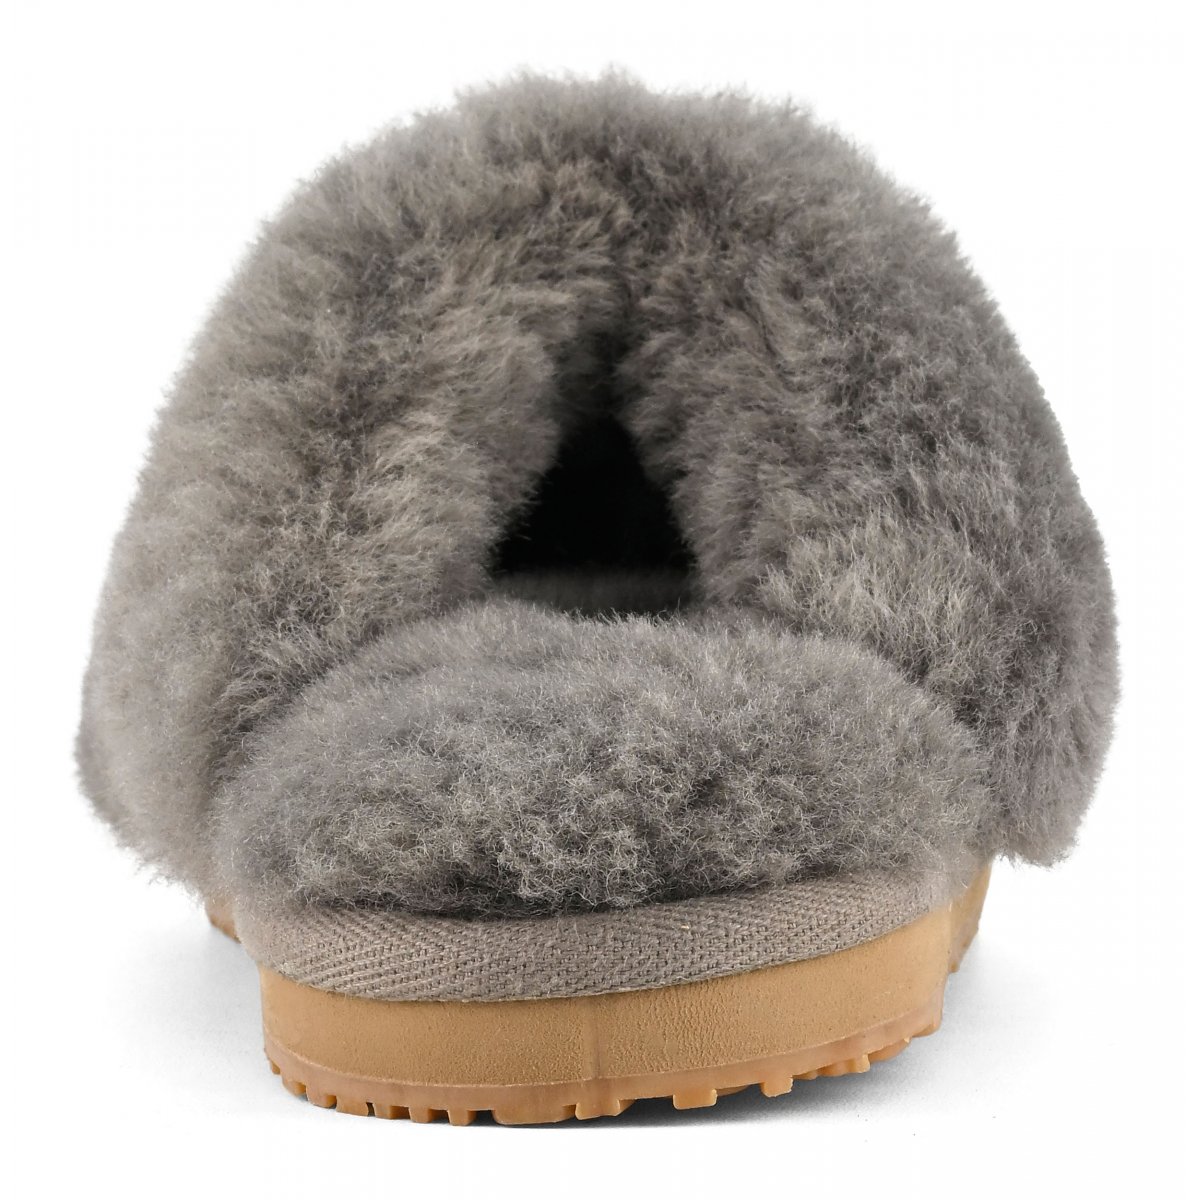 Doonberg babies' grey sheepskin slippers with a teddy bear face